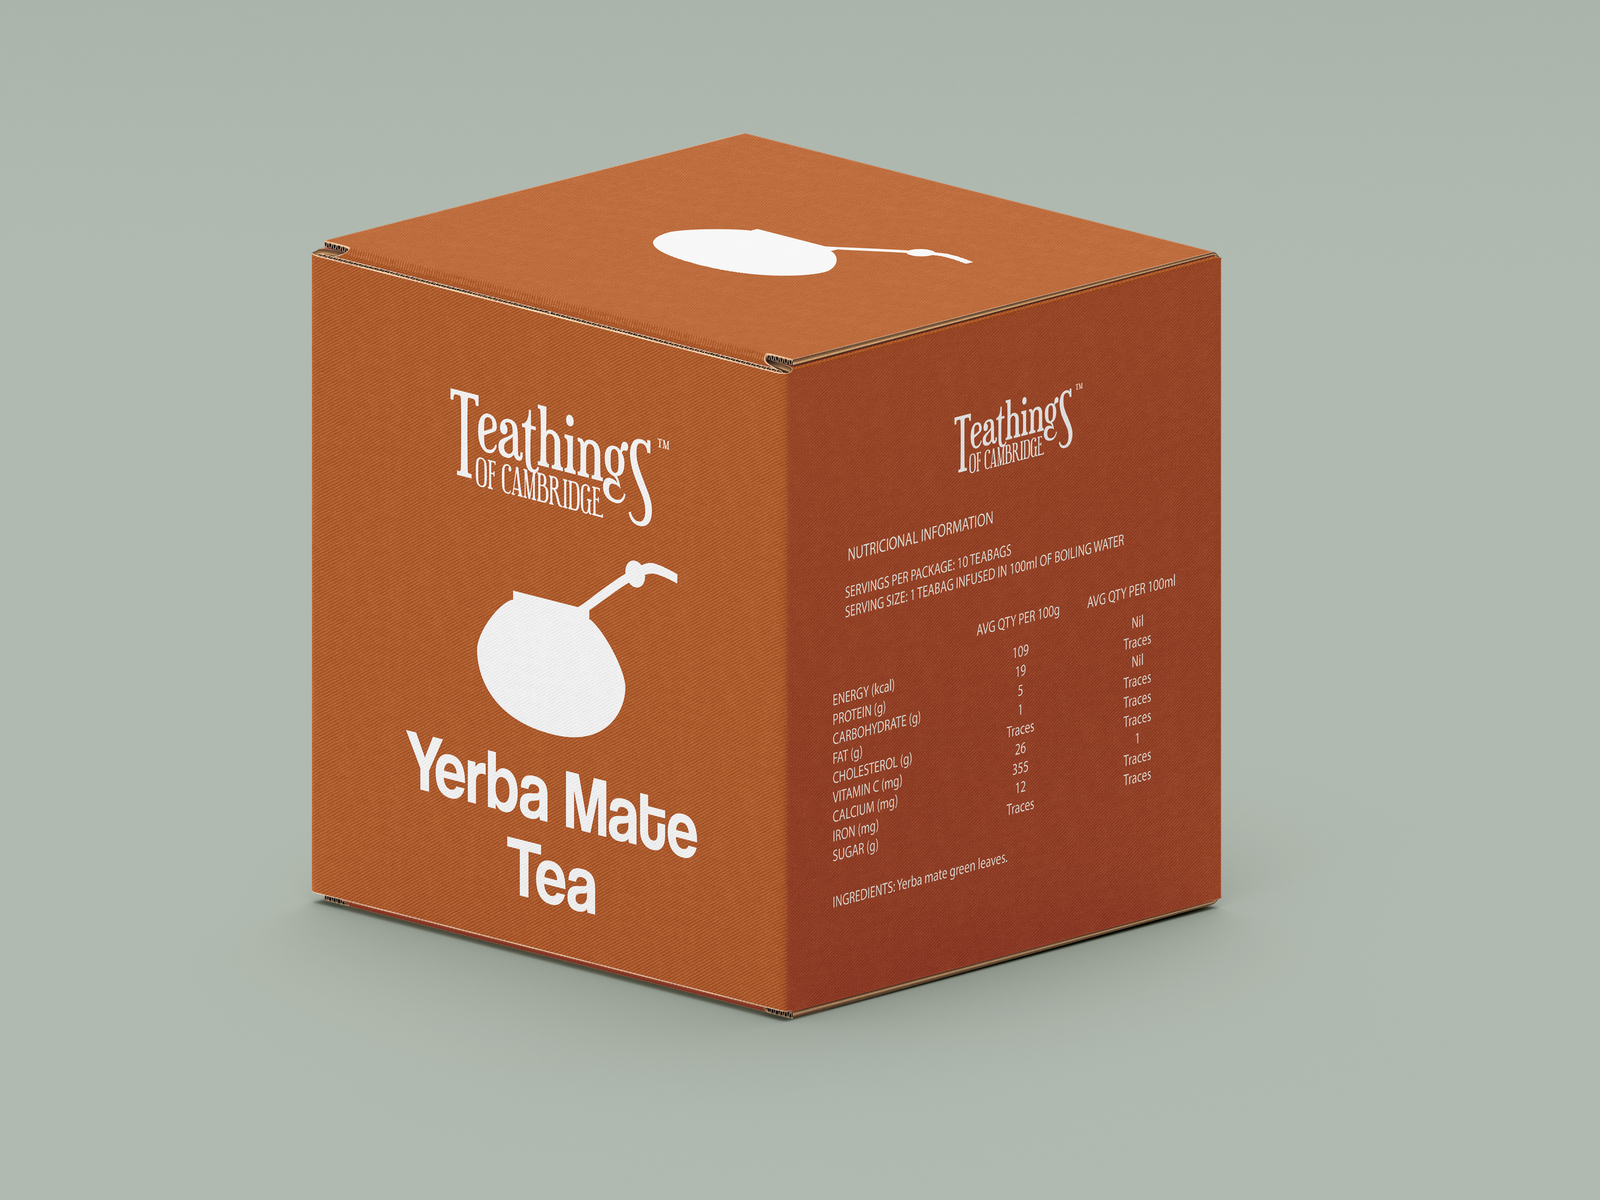 Original scraper mill Minimalist Tea Box Design: Yerba Mate Tea by Sarah Grimes on Dribbble